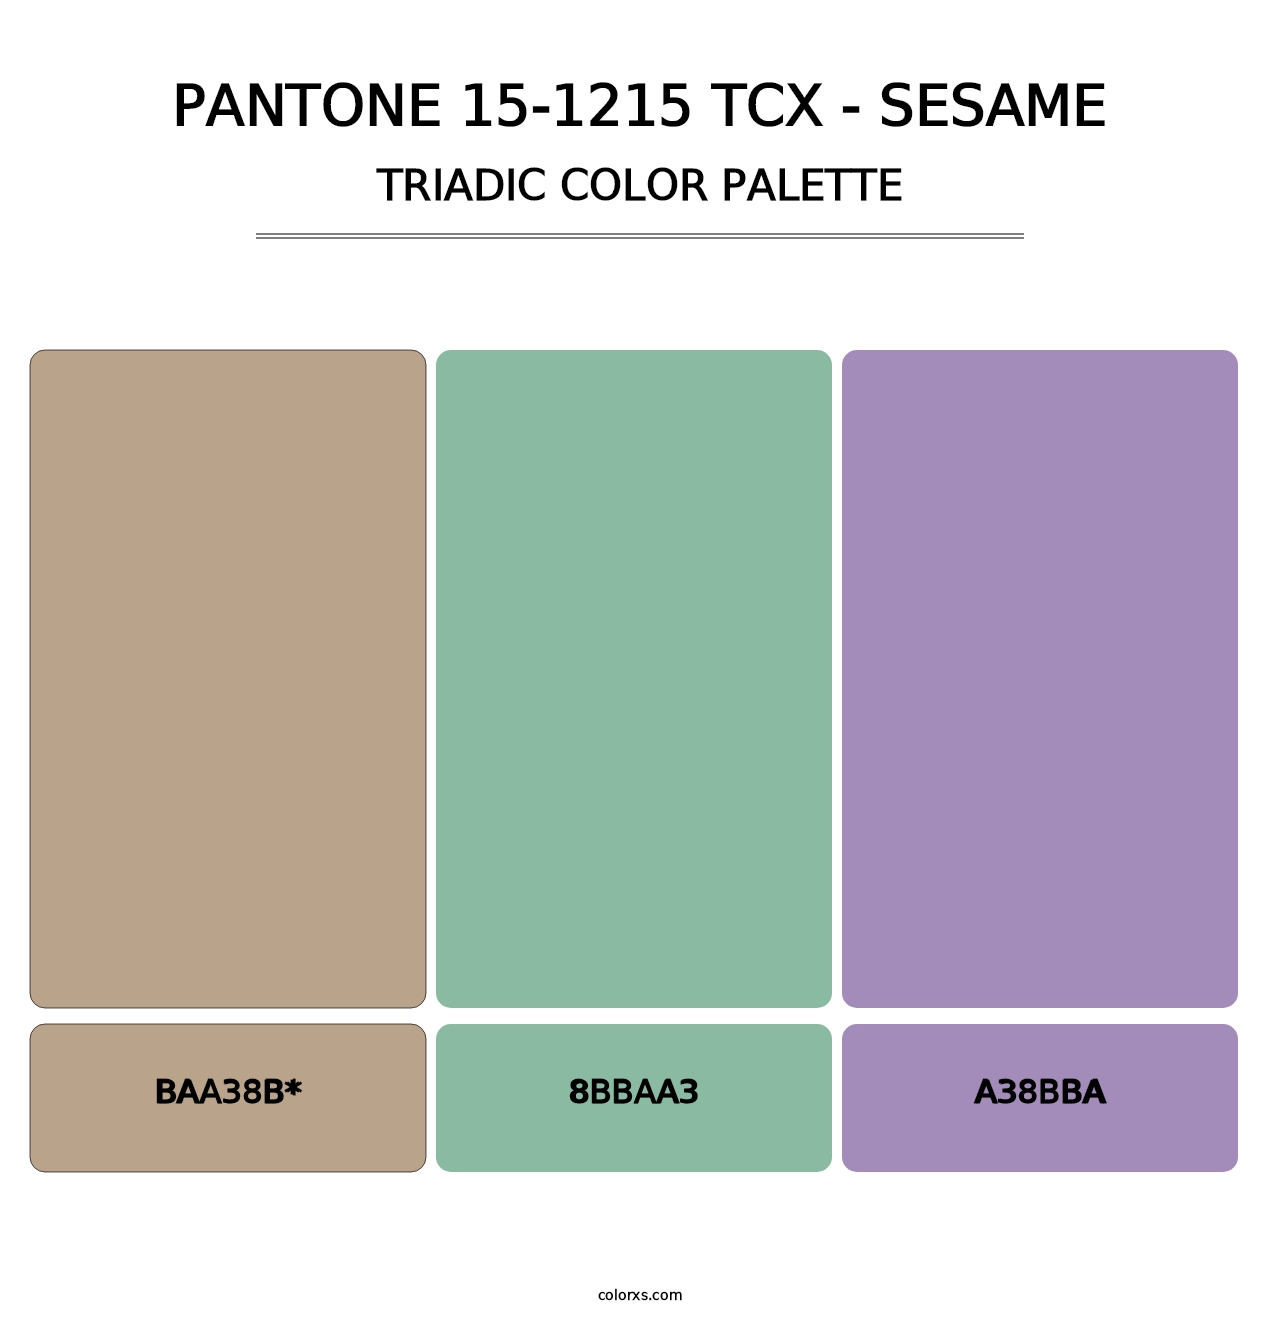 PANTONE 15-1215 TCX - Sesame - Triadic Color Palette